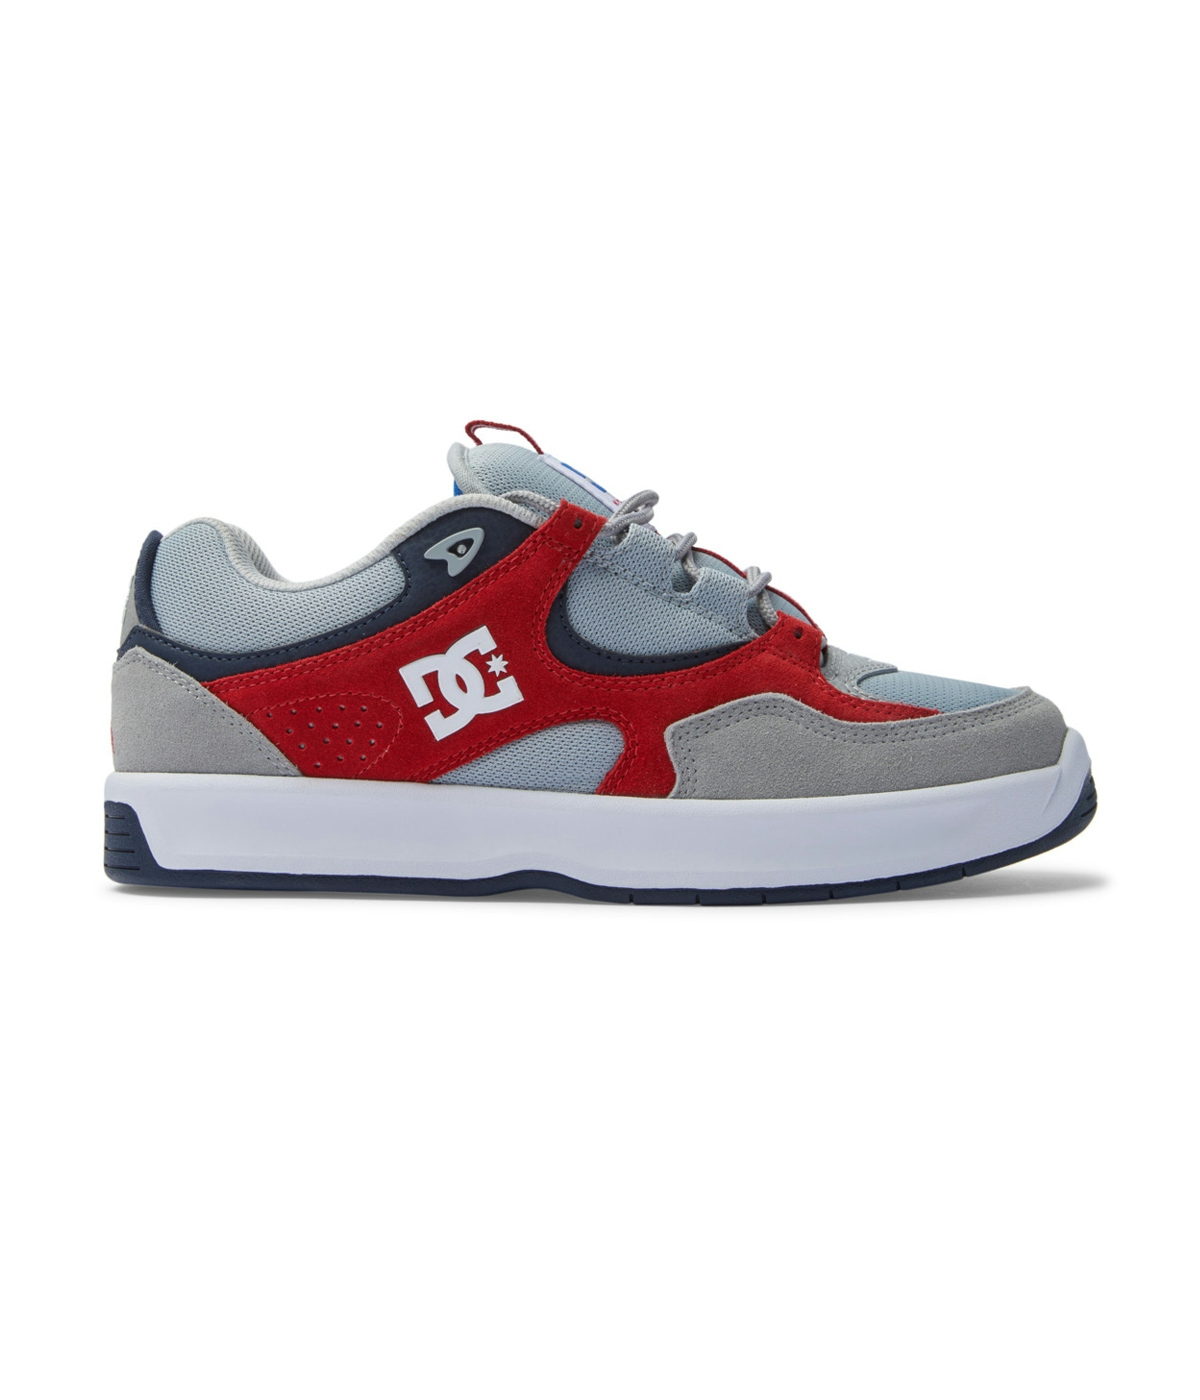 DC Shoes Kalynx Zero S Shoes Grey/Red 3